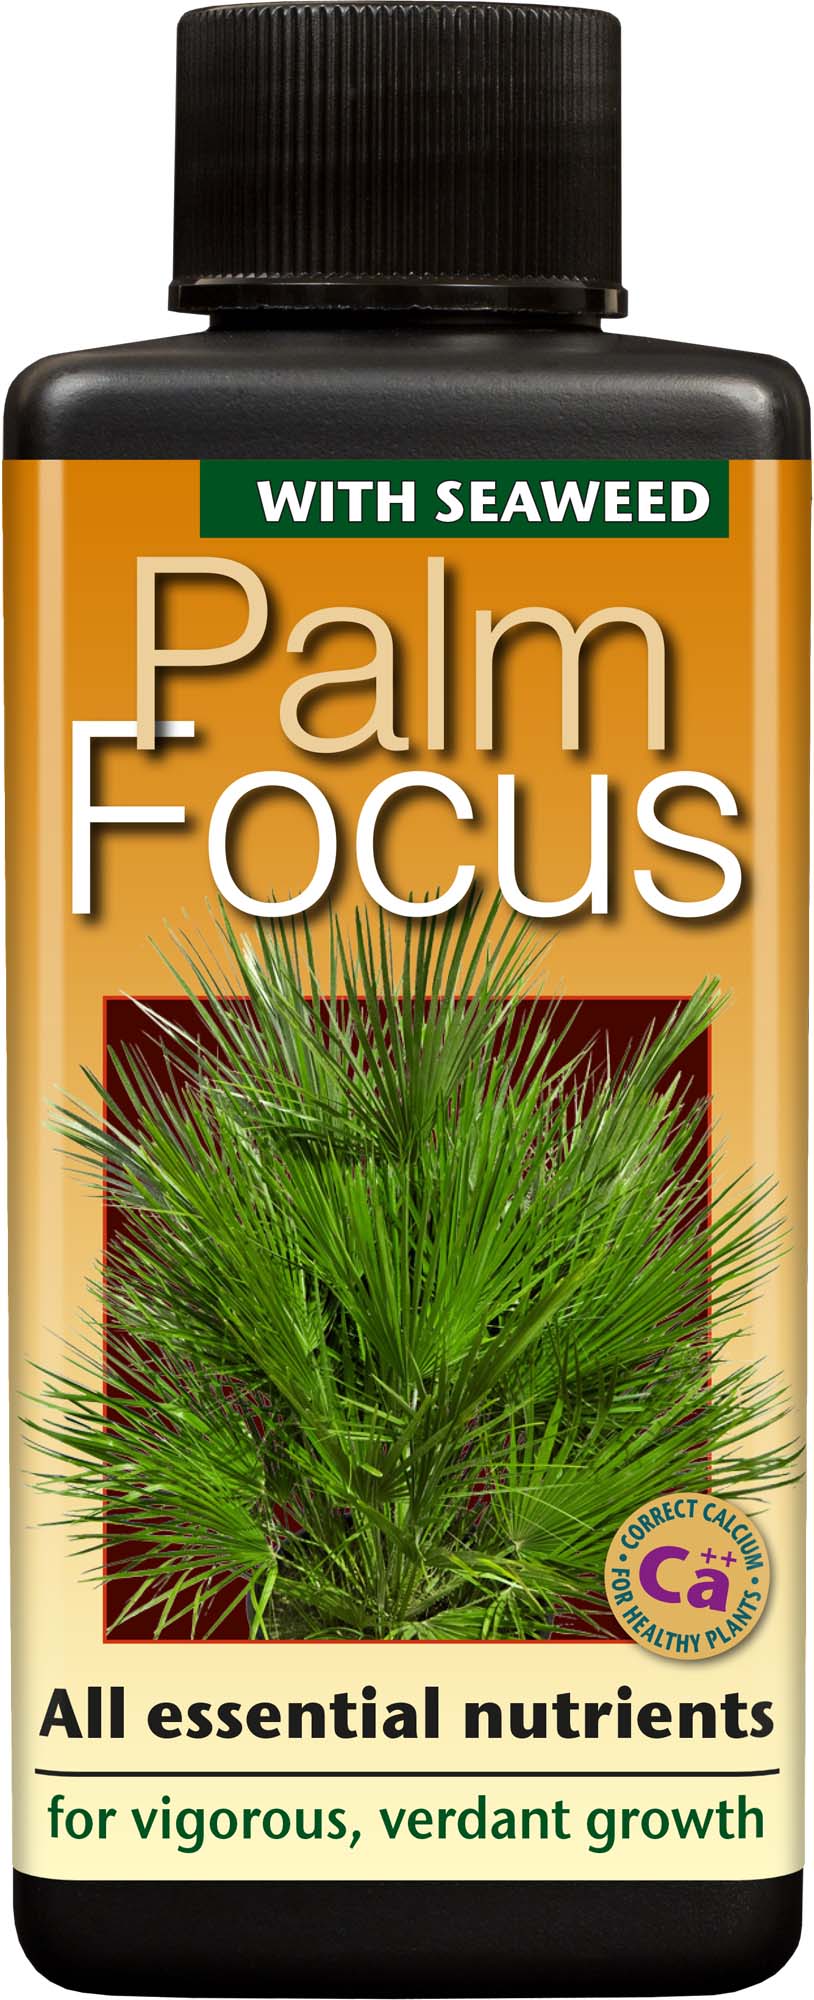 Growth Technology Palm Focus